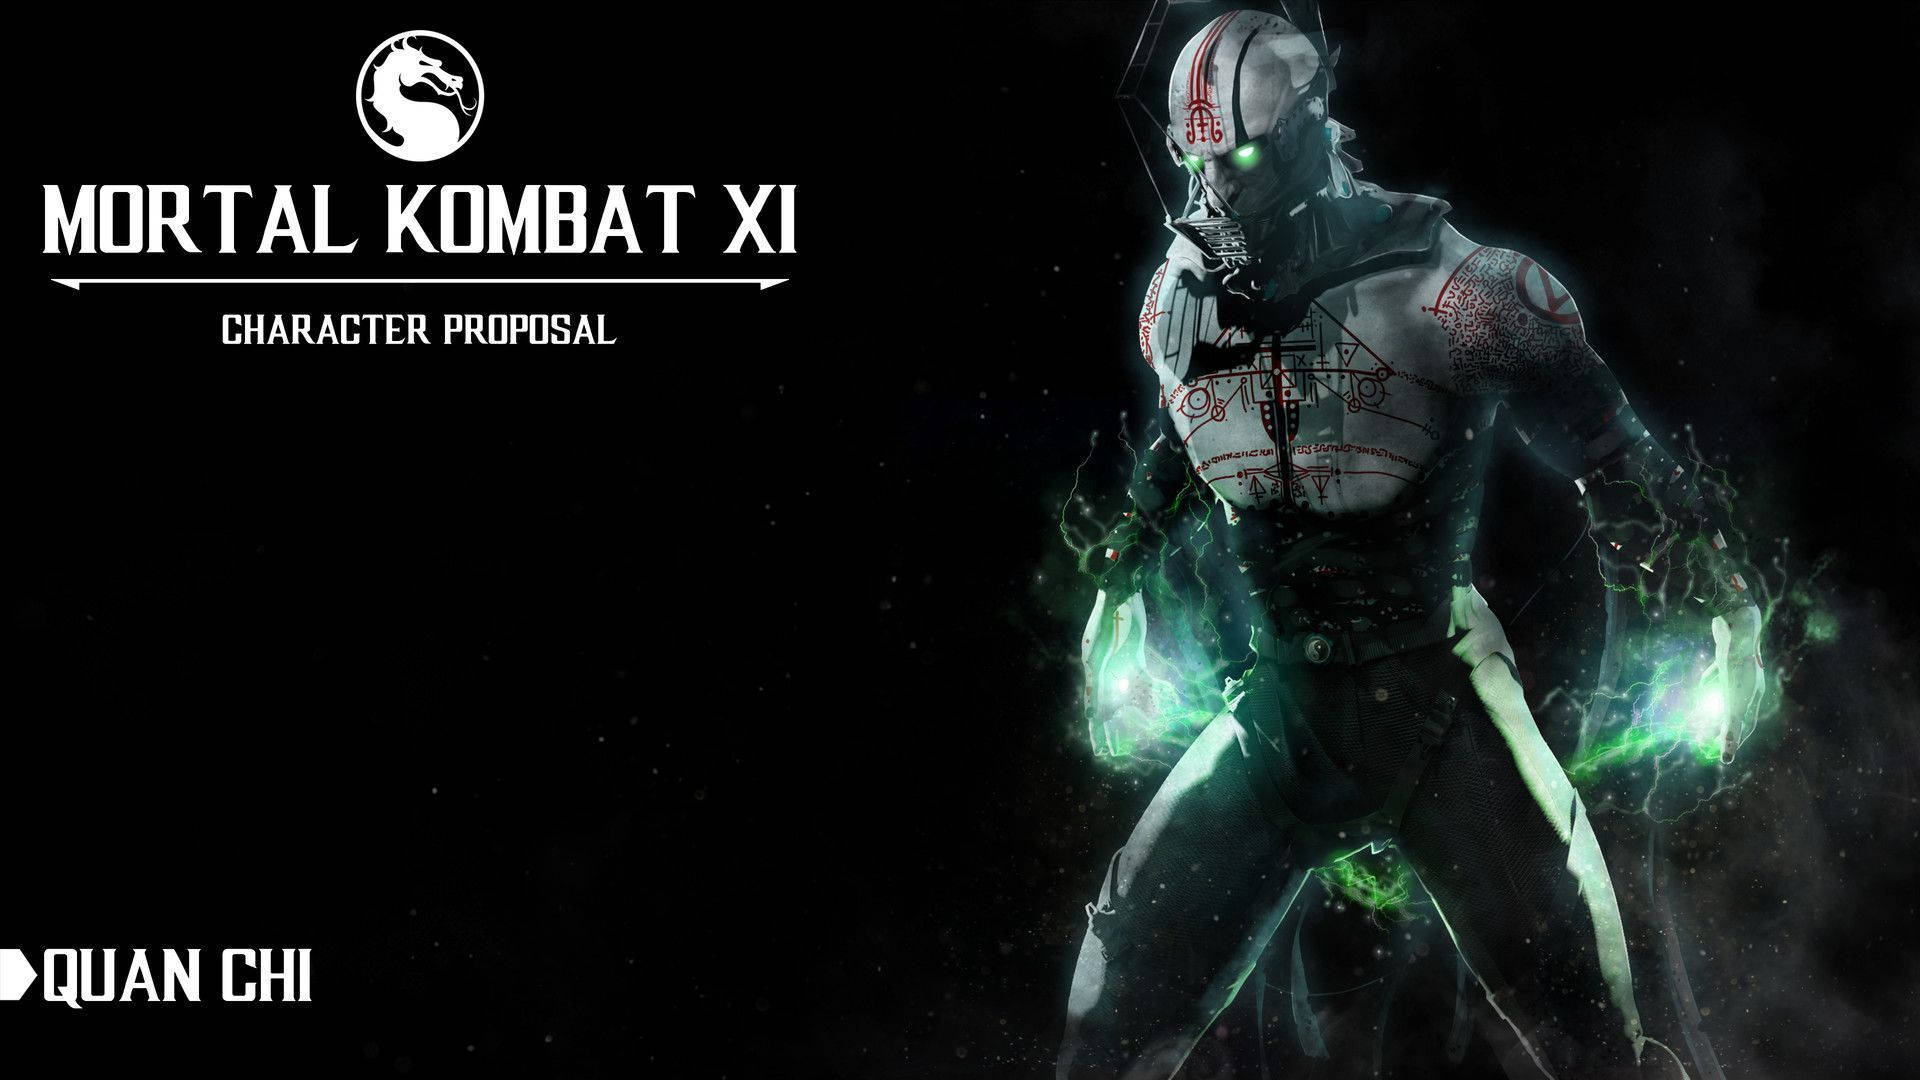 Top 999+ Mortal Kombat 11 Wallpapers Full HD, 4K✅Free to Use